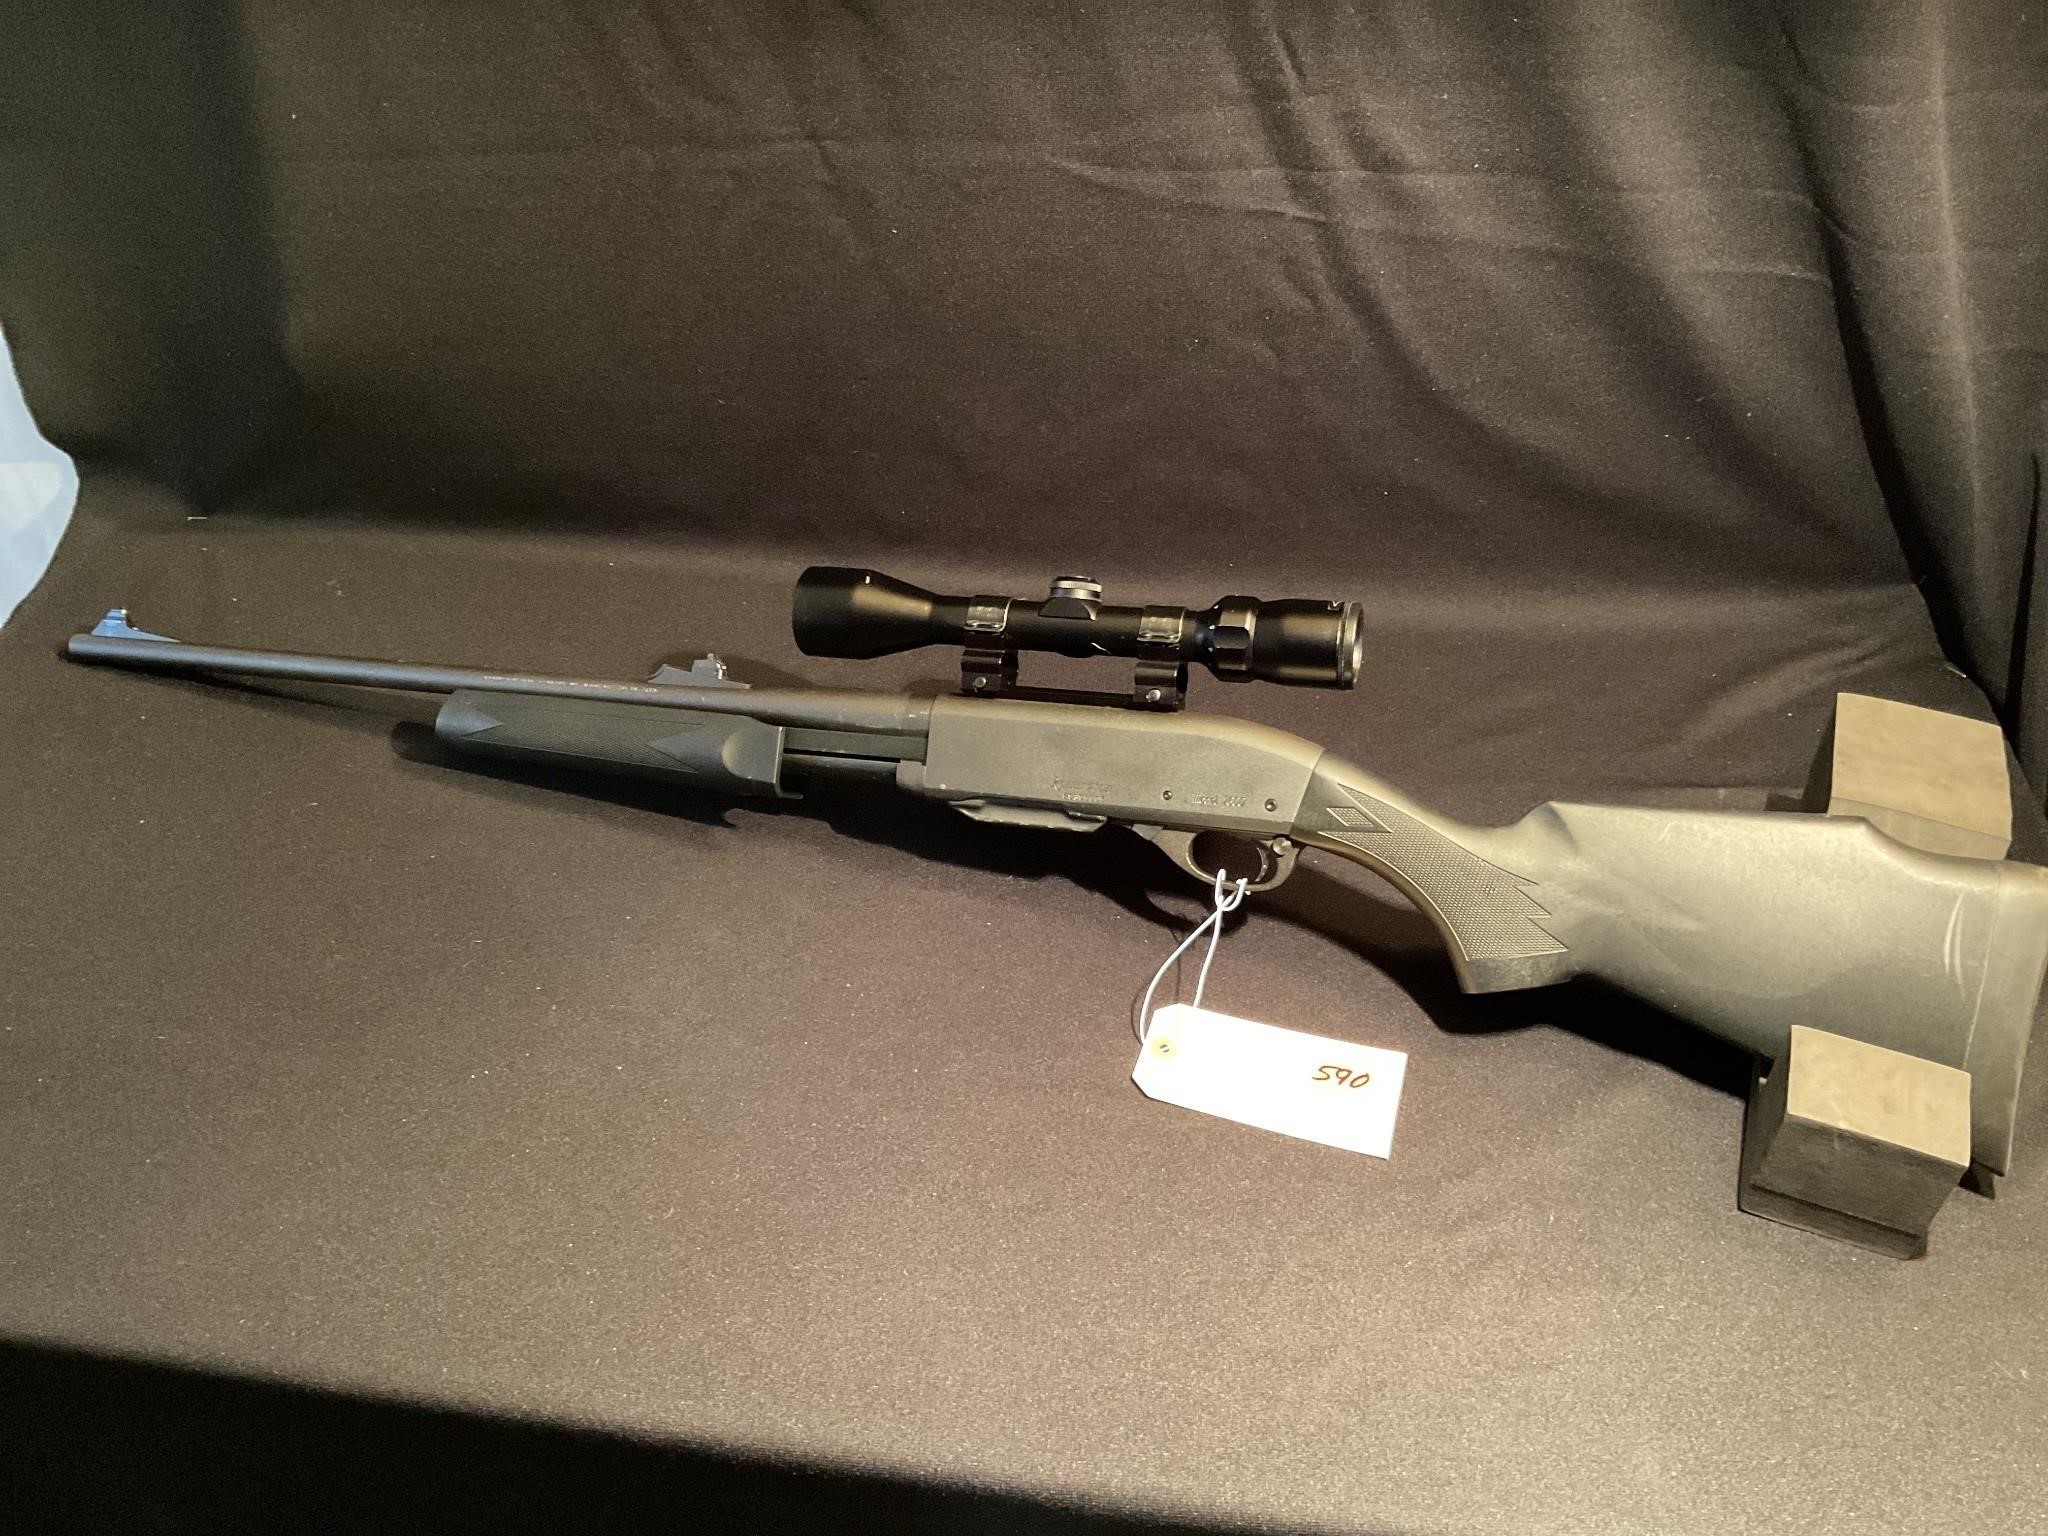 Remington 7600 30-06 Rif,w,scope